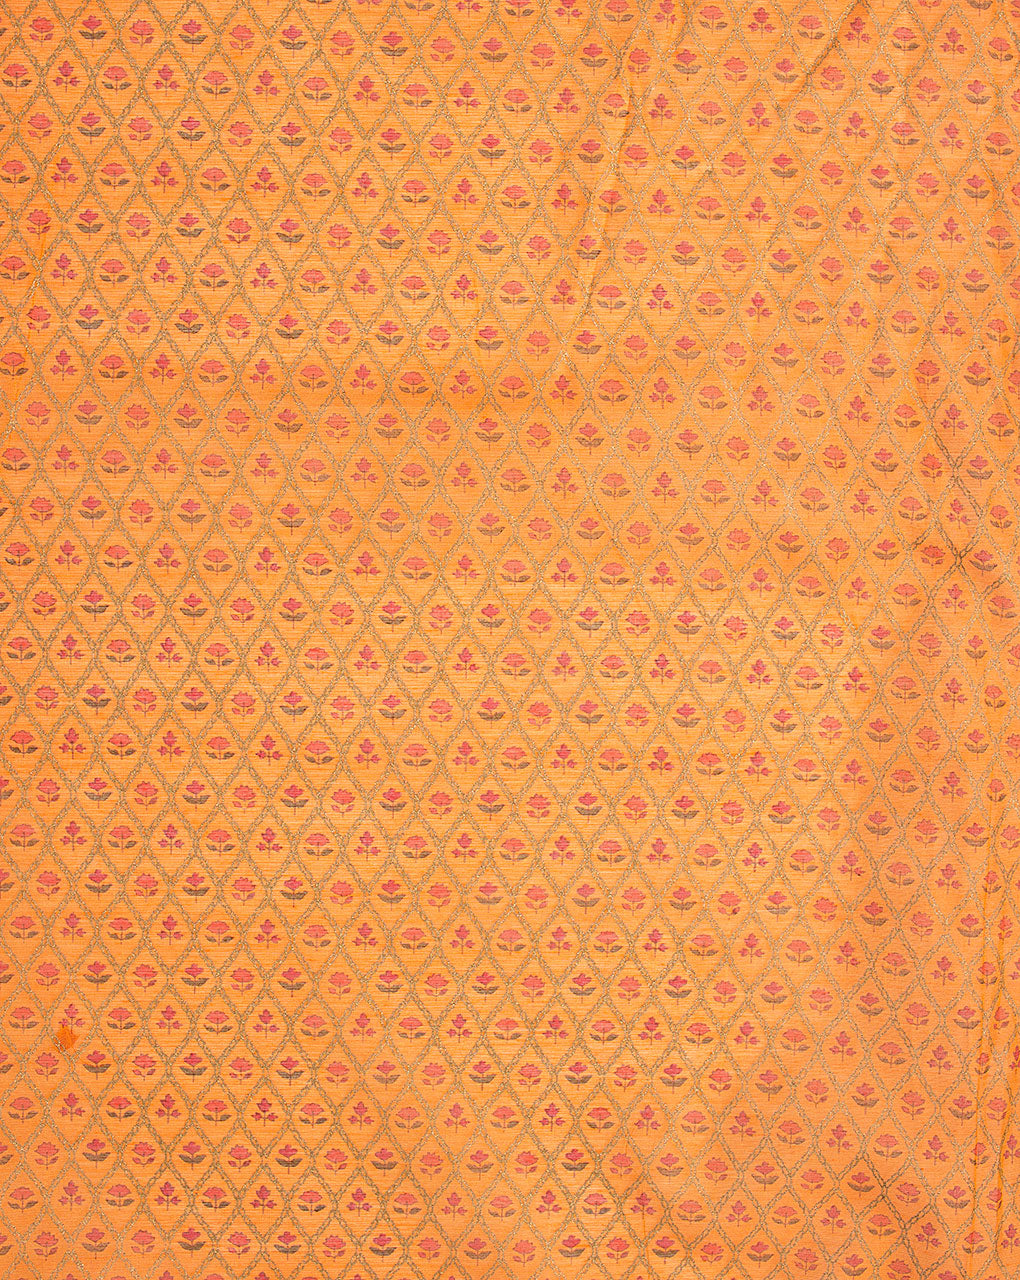 Booti Screen Print Chanderi Fabric - Fabriclore.com